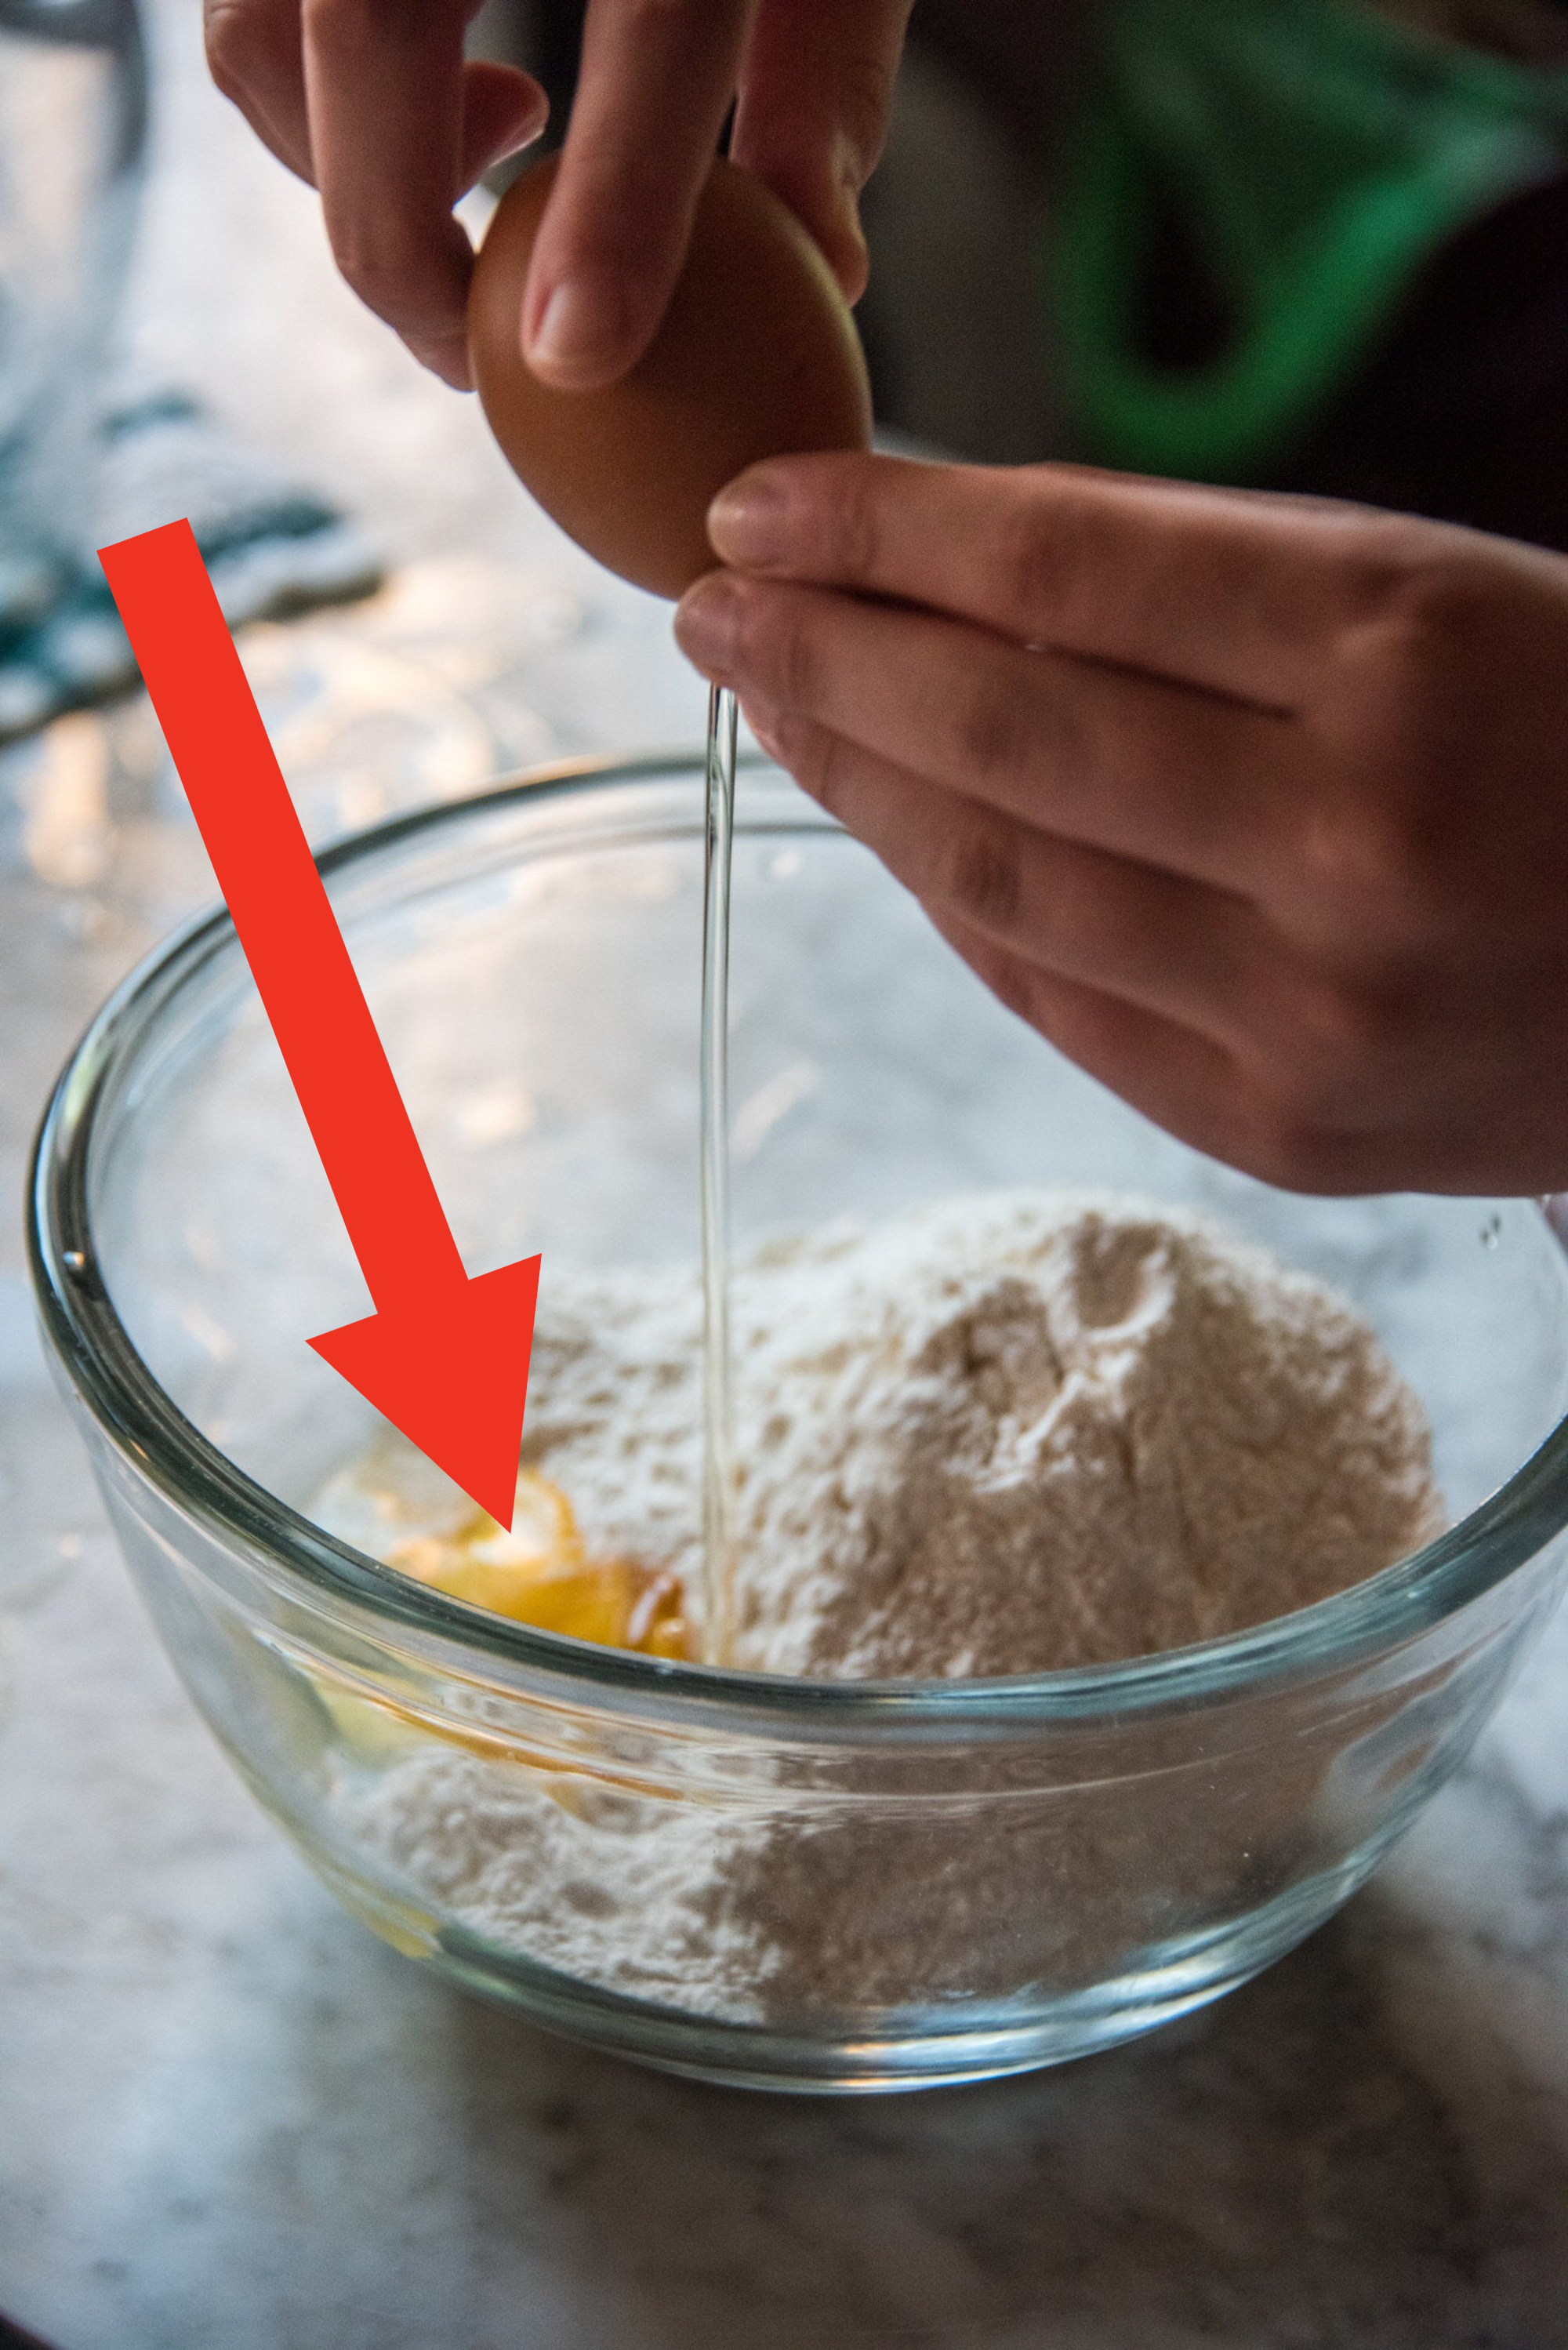 Cracking an egg into a bowl with white flour.